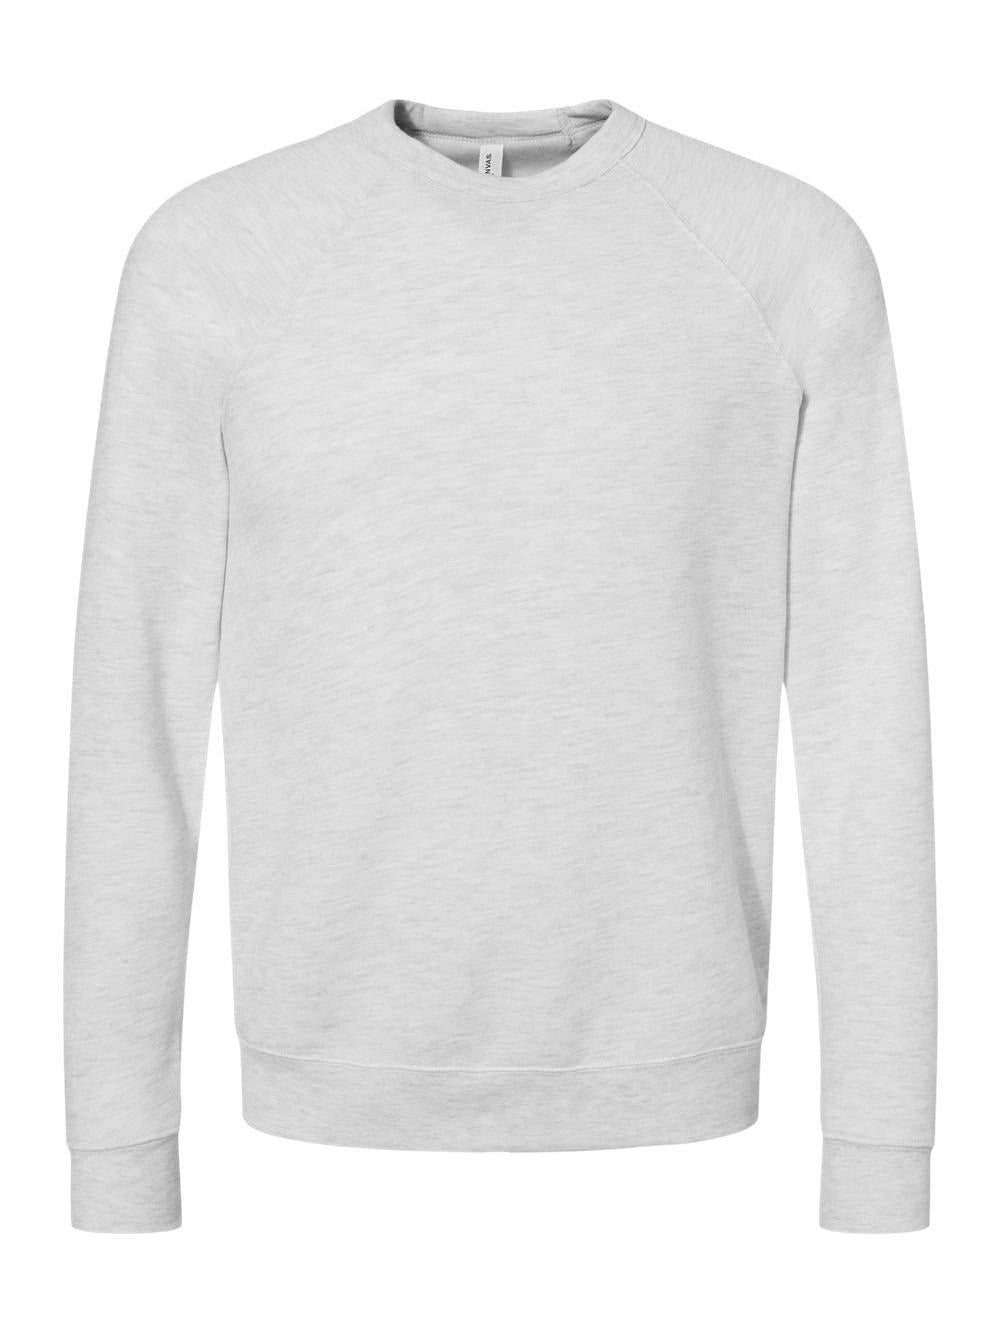 XS - BELLA Canvas Unisex Sponge Fleece Crew Neck Sweatshirt Style # 3901 - Original Label Grey Triblend 